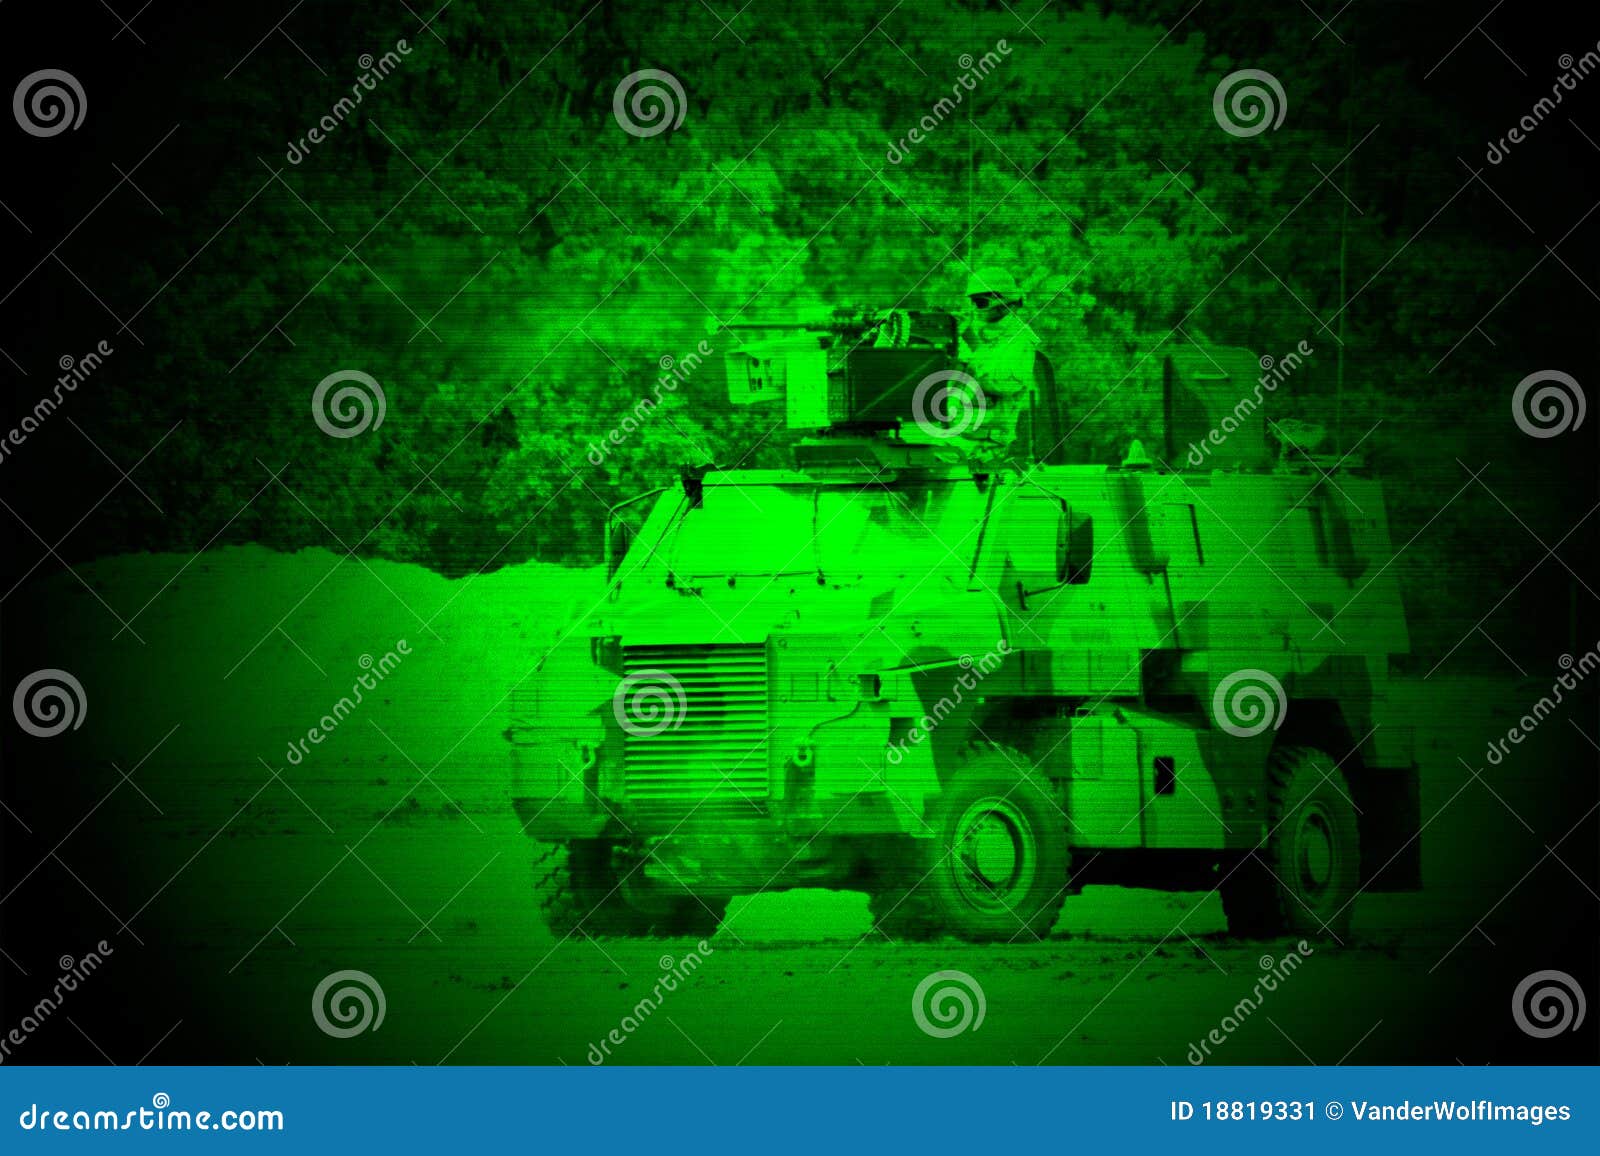 Vision nocturne militaire image stock. Image du camouflage - 18819331